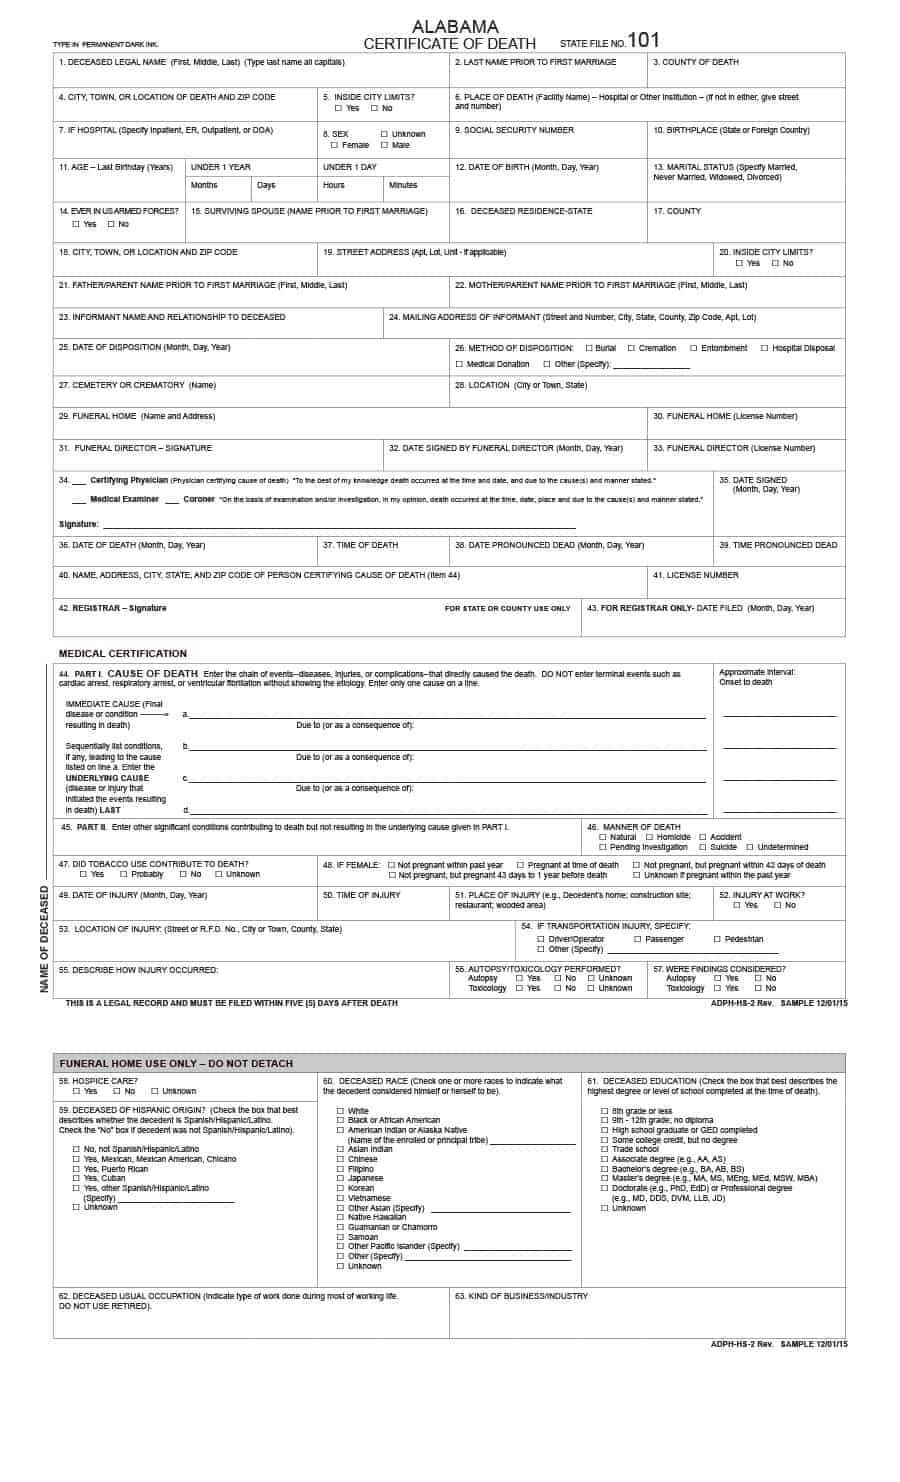 37 Blank Death Certificate Templates [100% Free] ᐅ Templatelab With Birth Certificate Fake Template